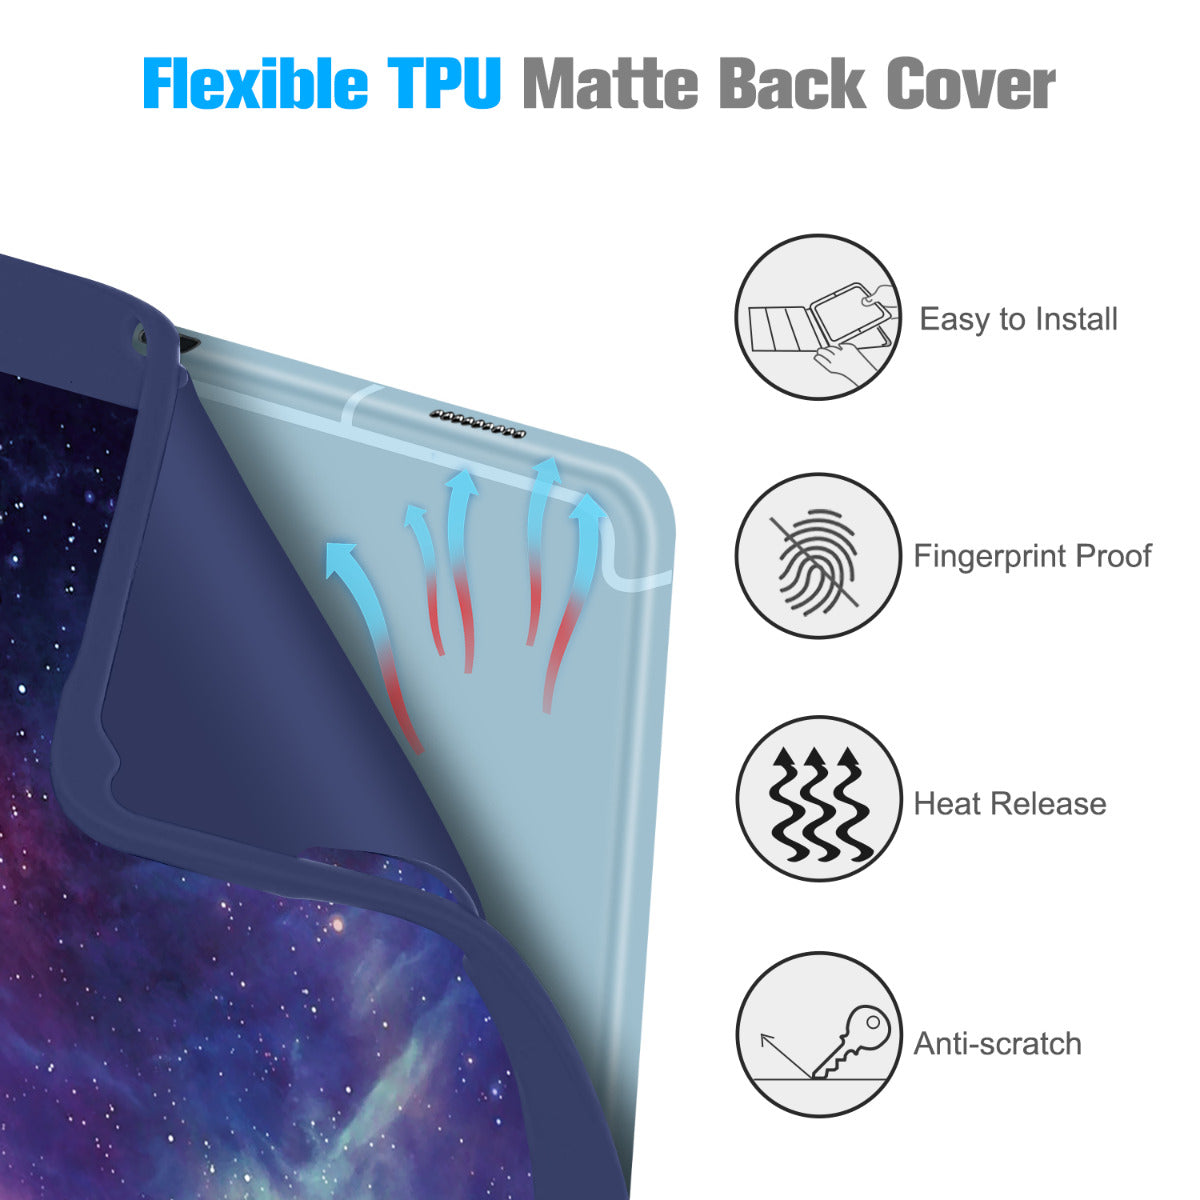 Galaxy Tab S6 Lite 10.4' 2022/2020 Slim Case with Soft TPU Back | Fintie